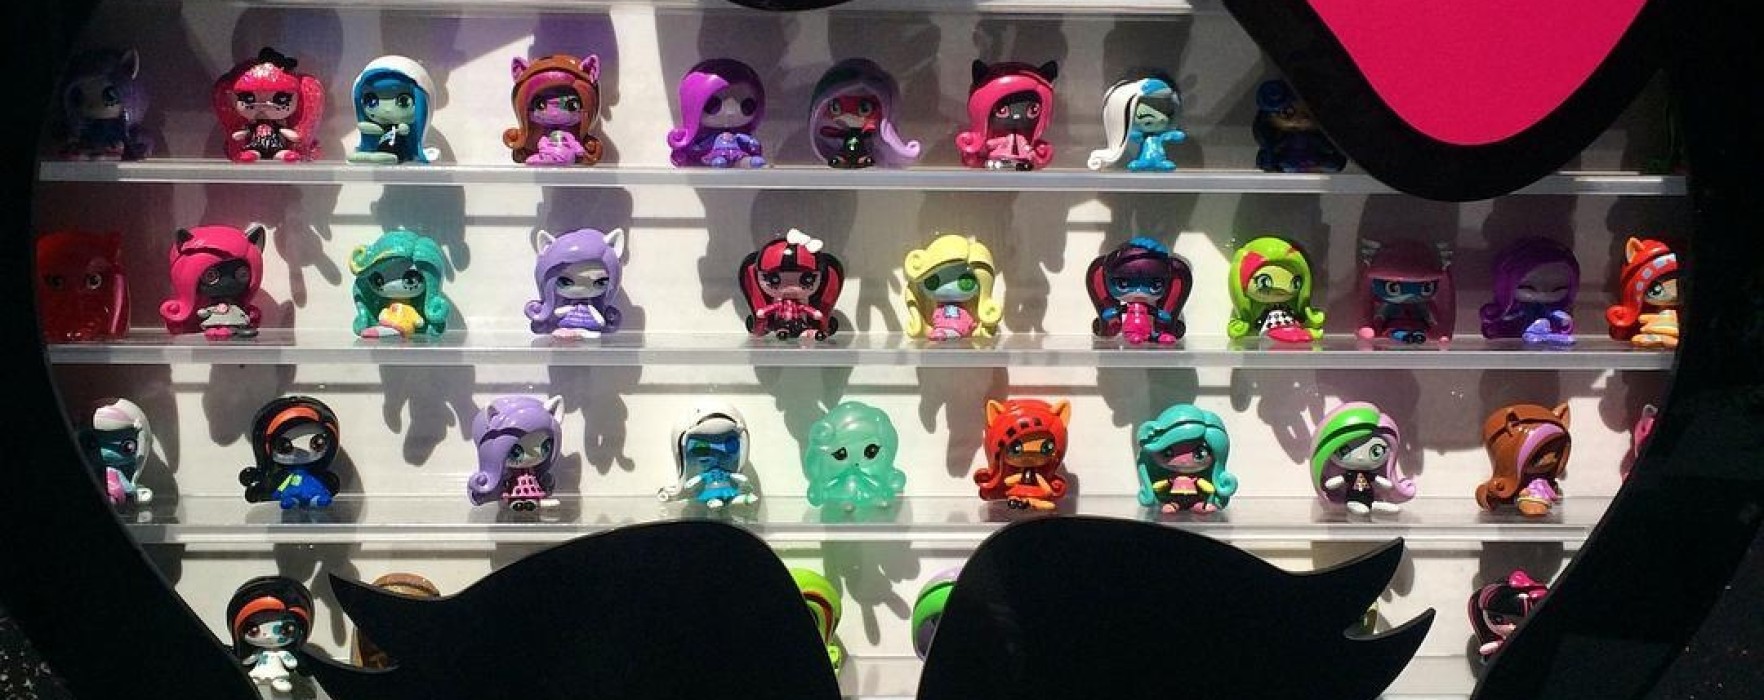 Нью-Йоркская ярмарка игрушек Toy Fair 2016: экспозиция Monster High от Mattel — Welcome to Monster High, Shriek Wrecked и многое другое